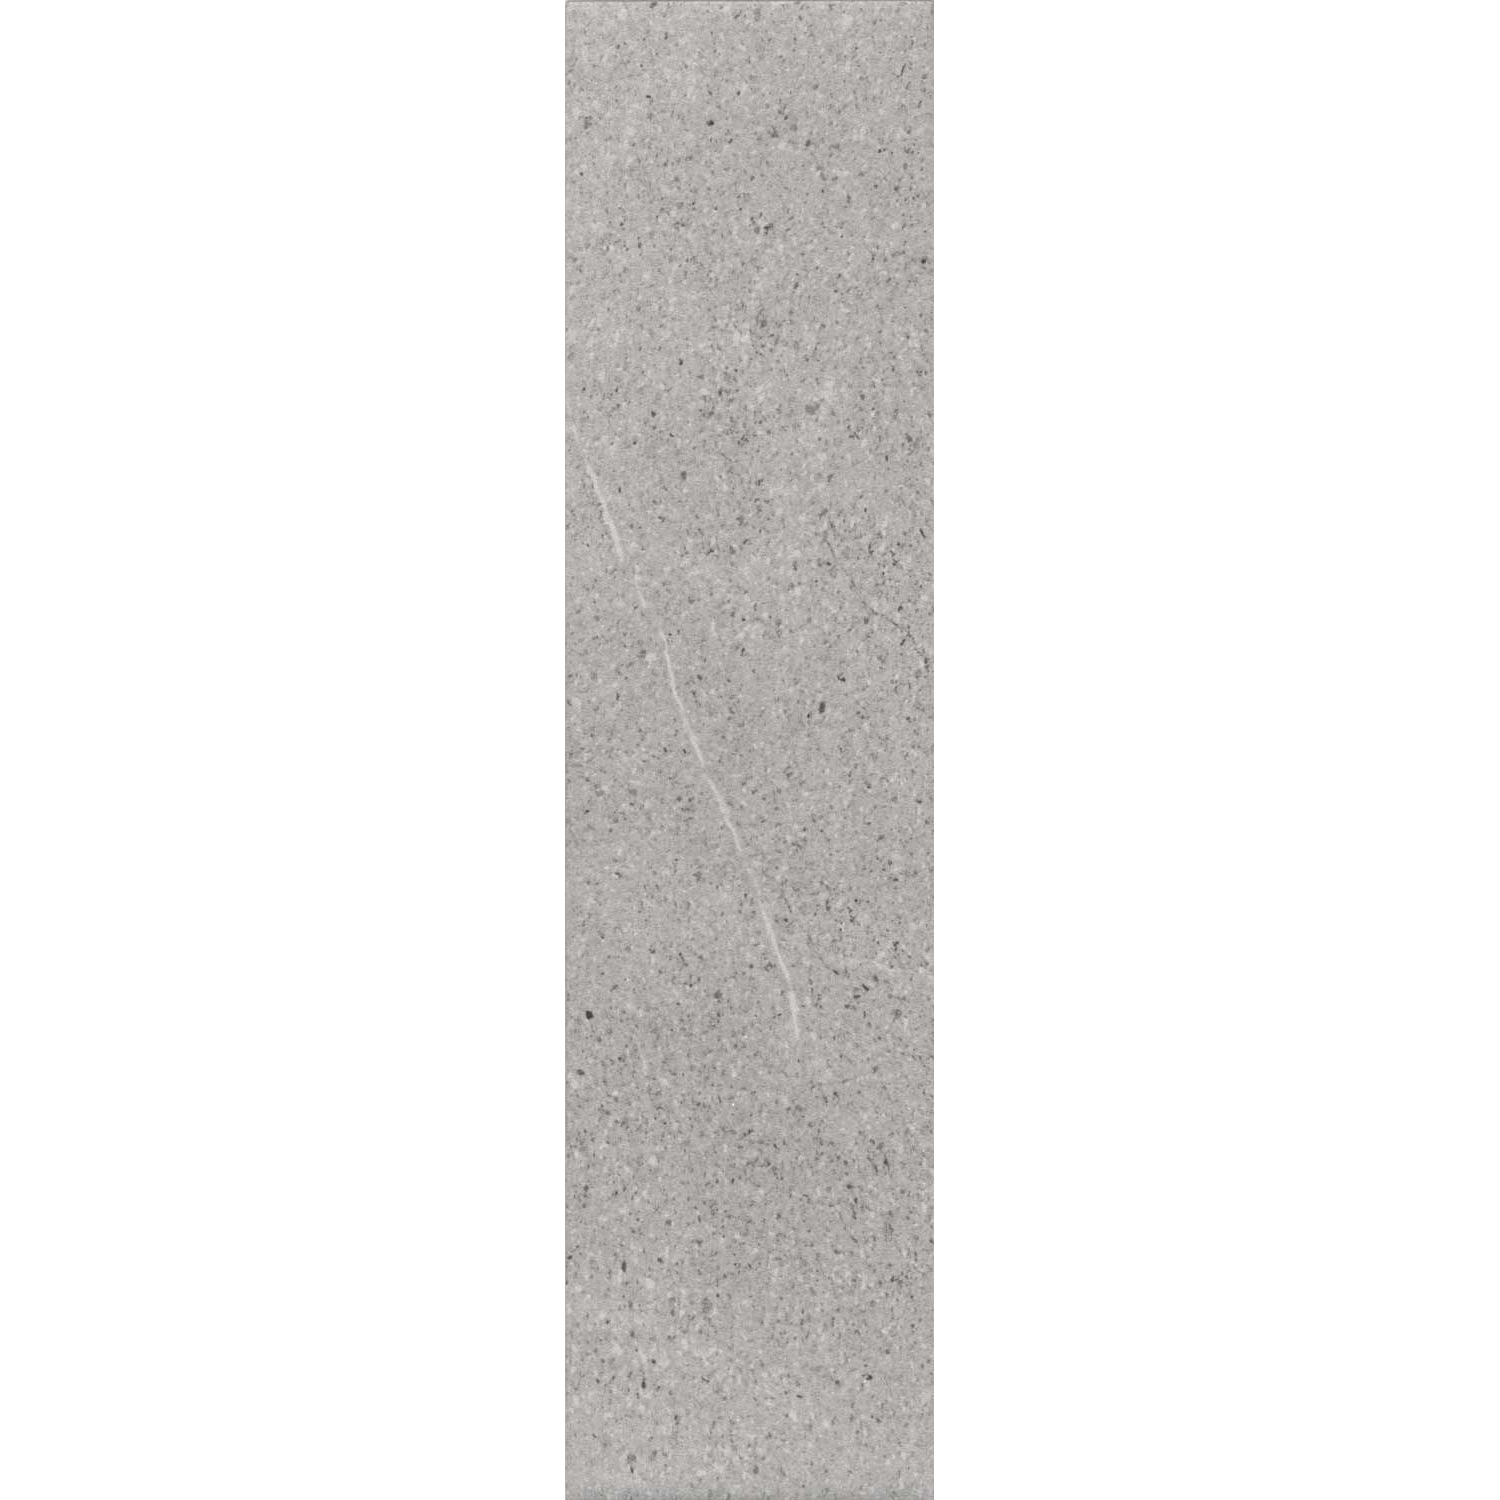 Плитка Kerama Marazzi Milano Порфидо SG402600N серый светлый 9,9x40,2x0,8 см